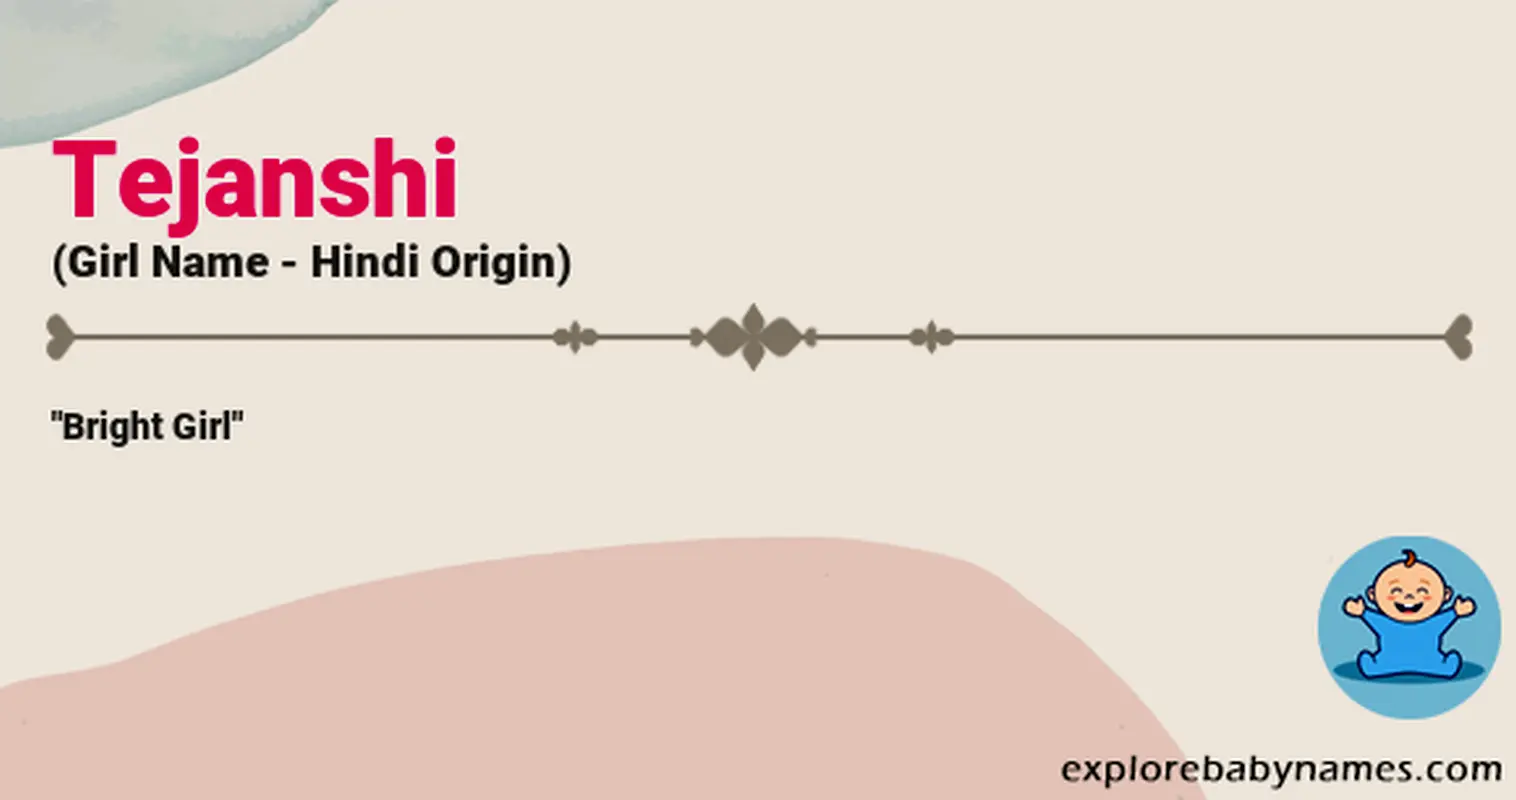 Meaning of Tejanshi